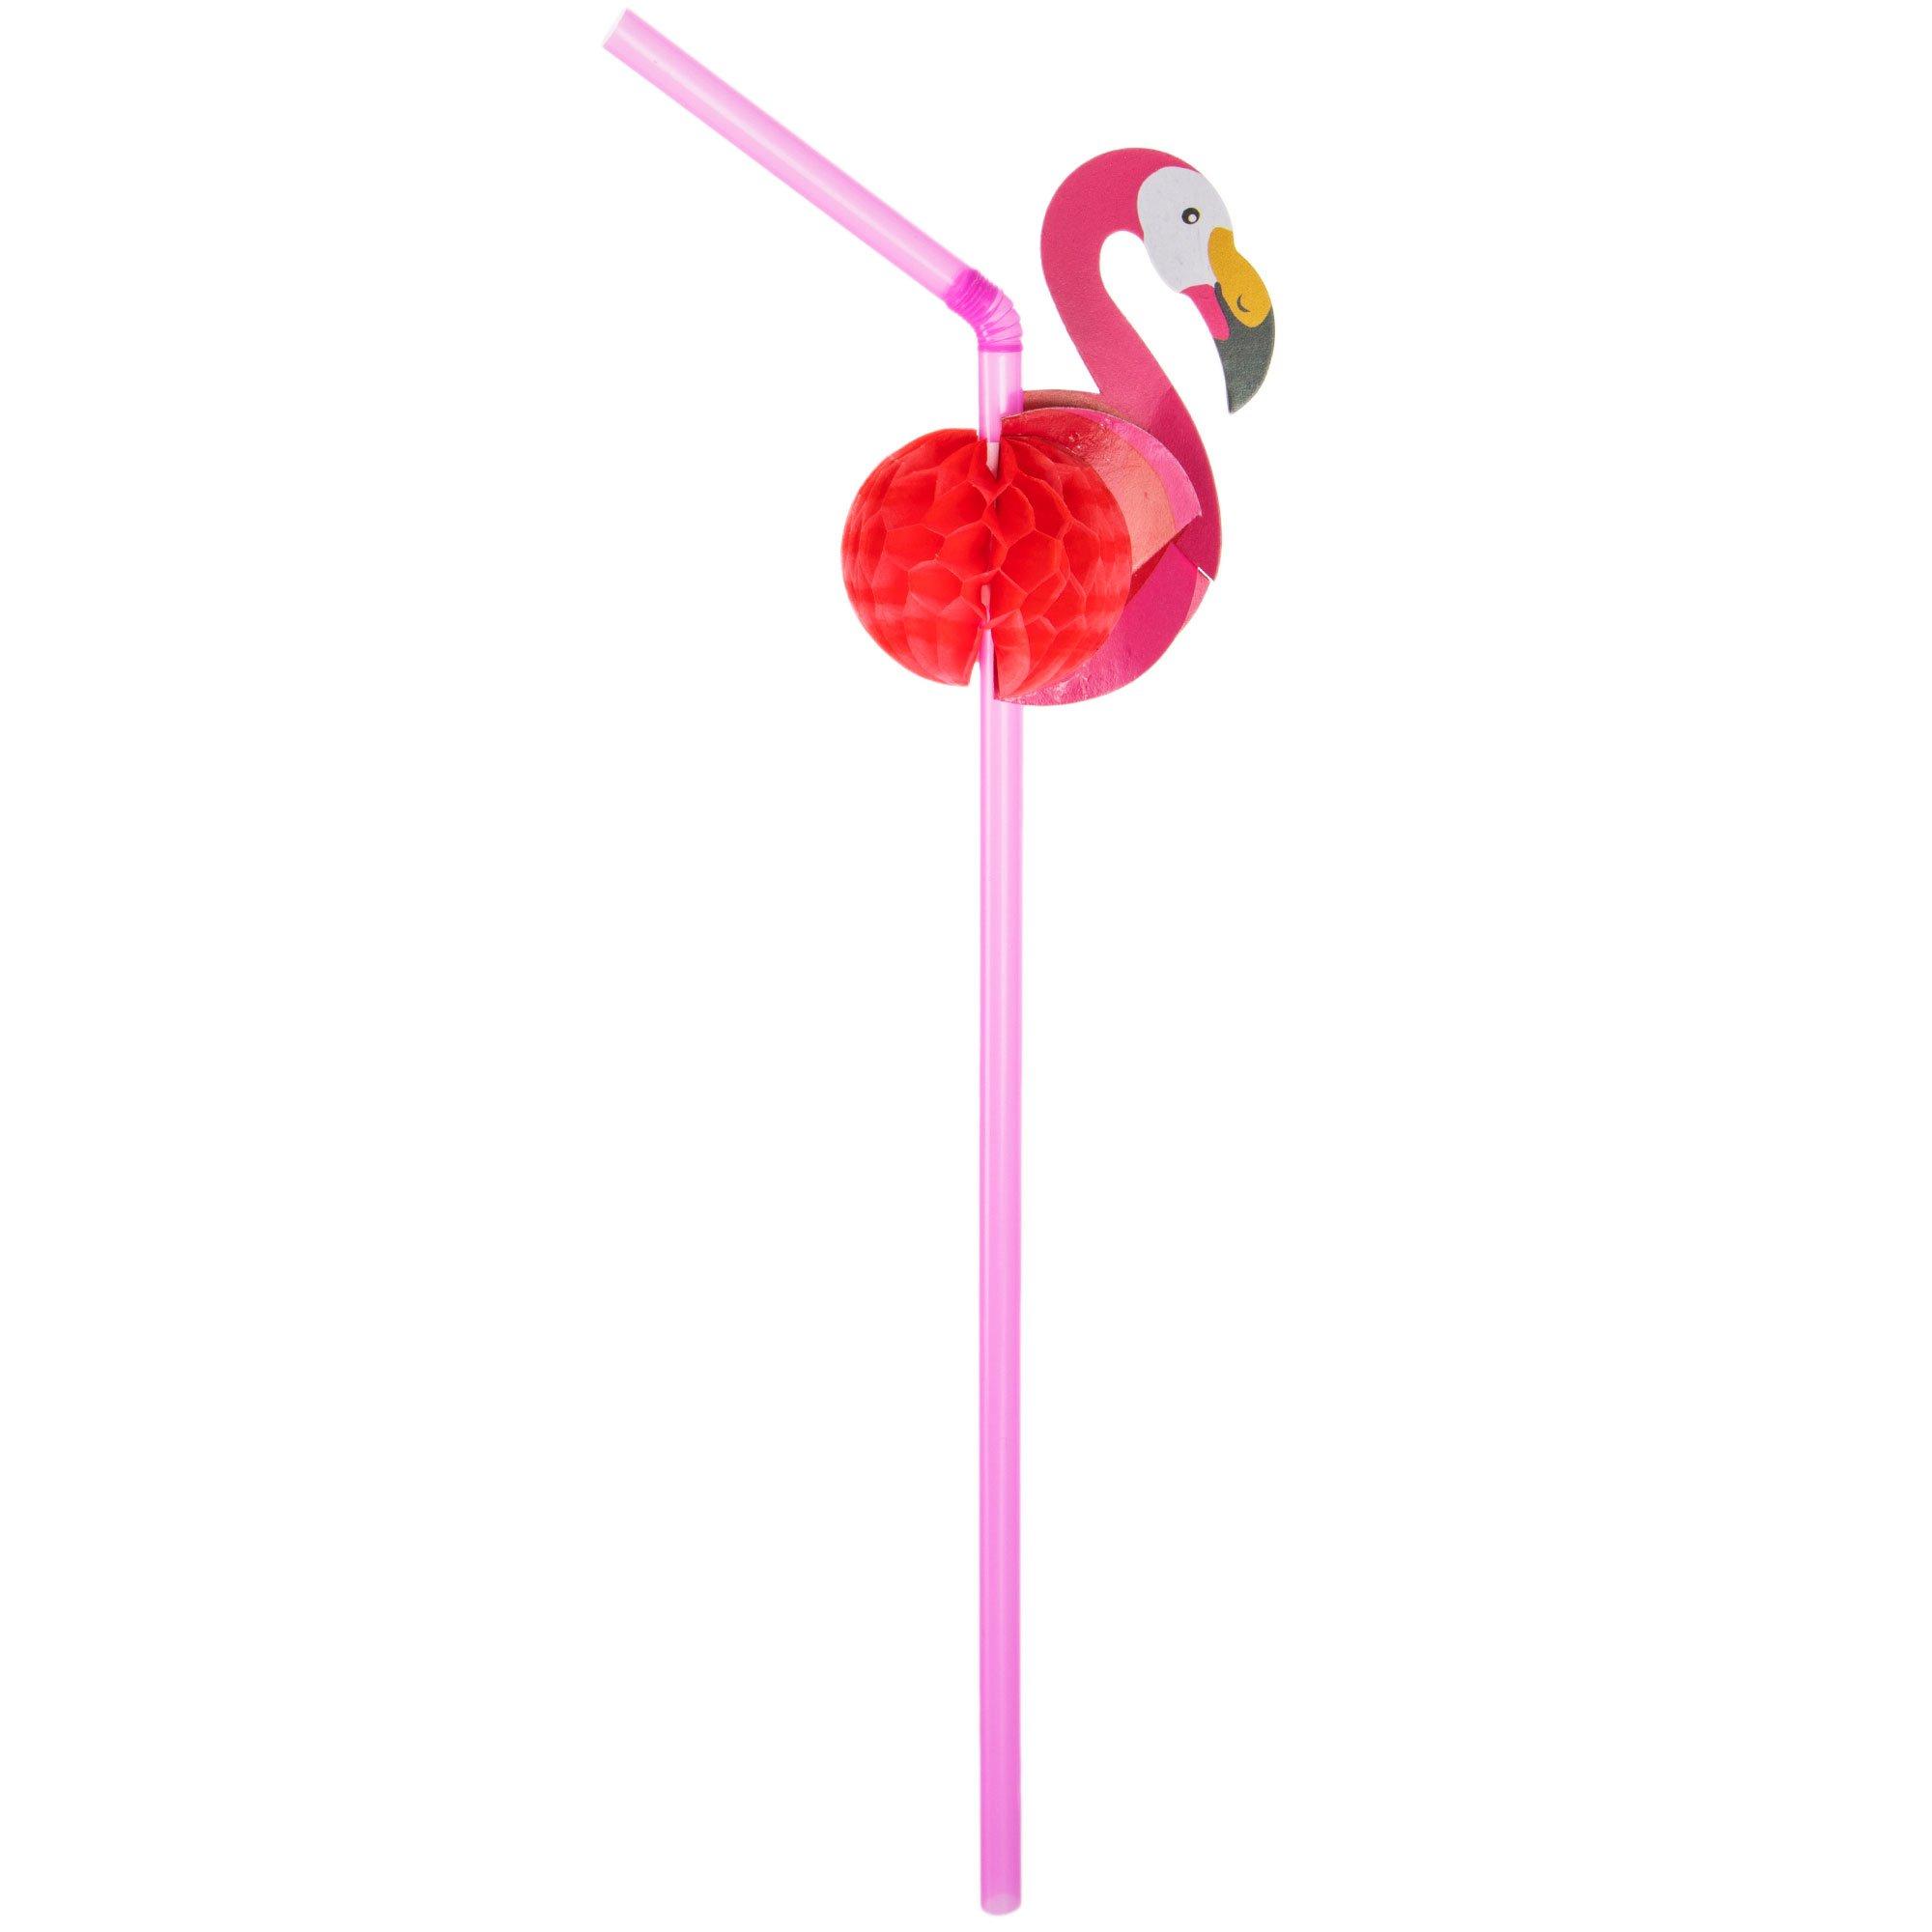 12 Flamingo Straws